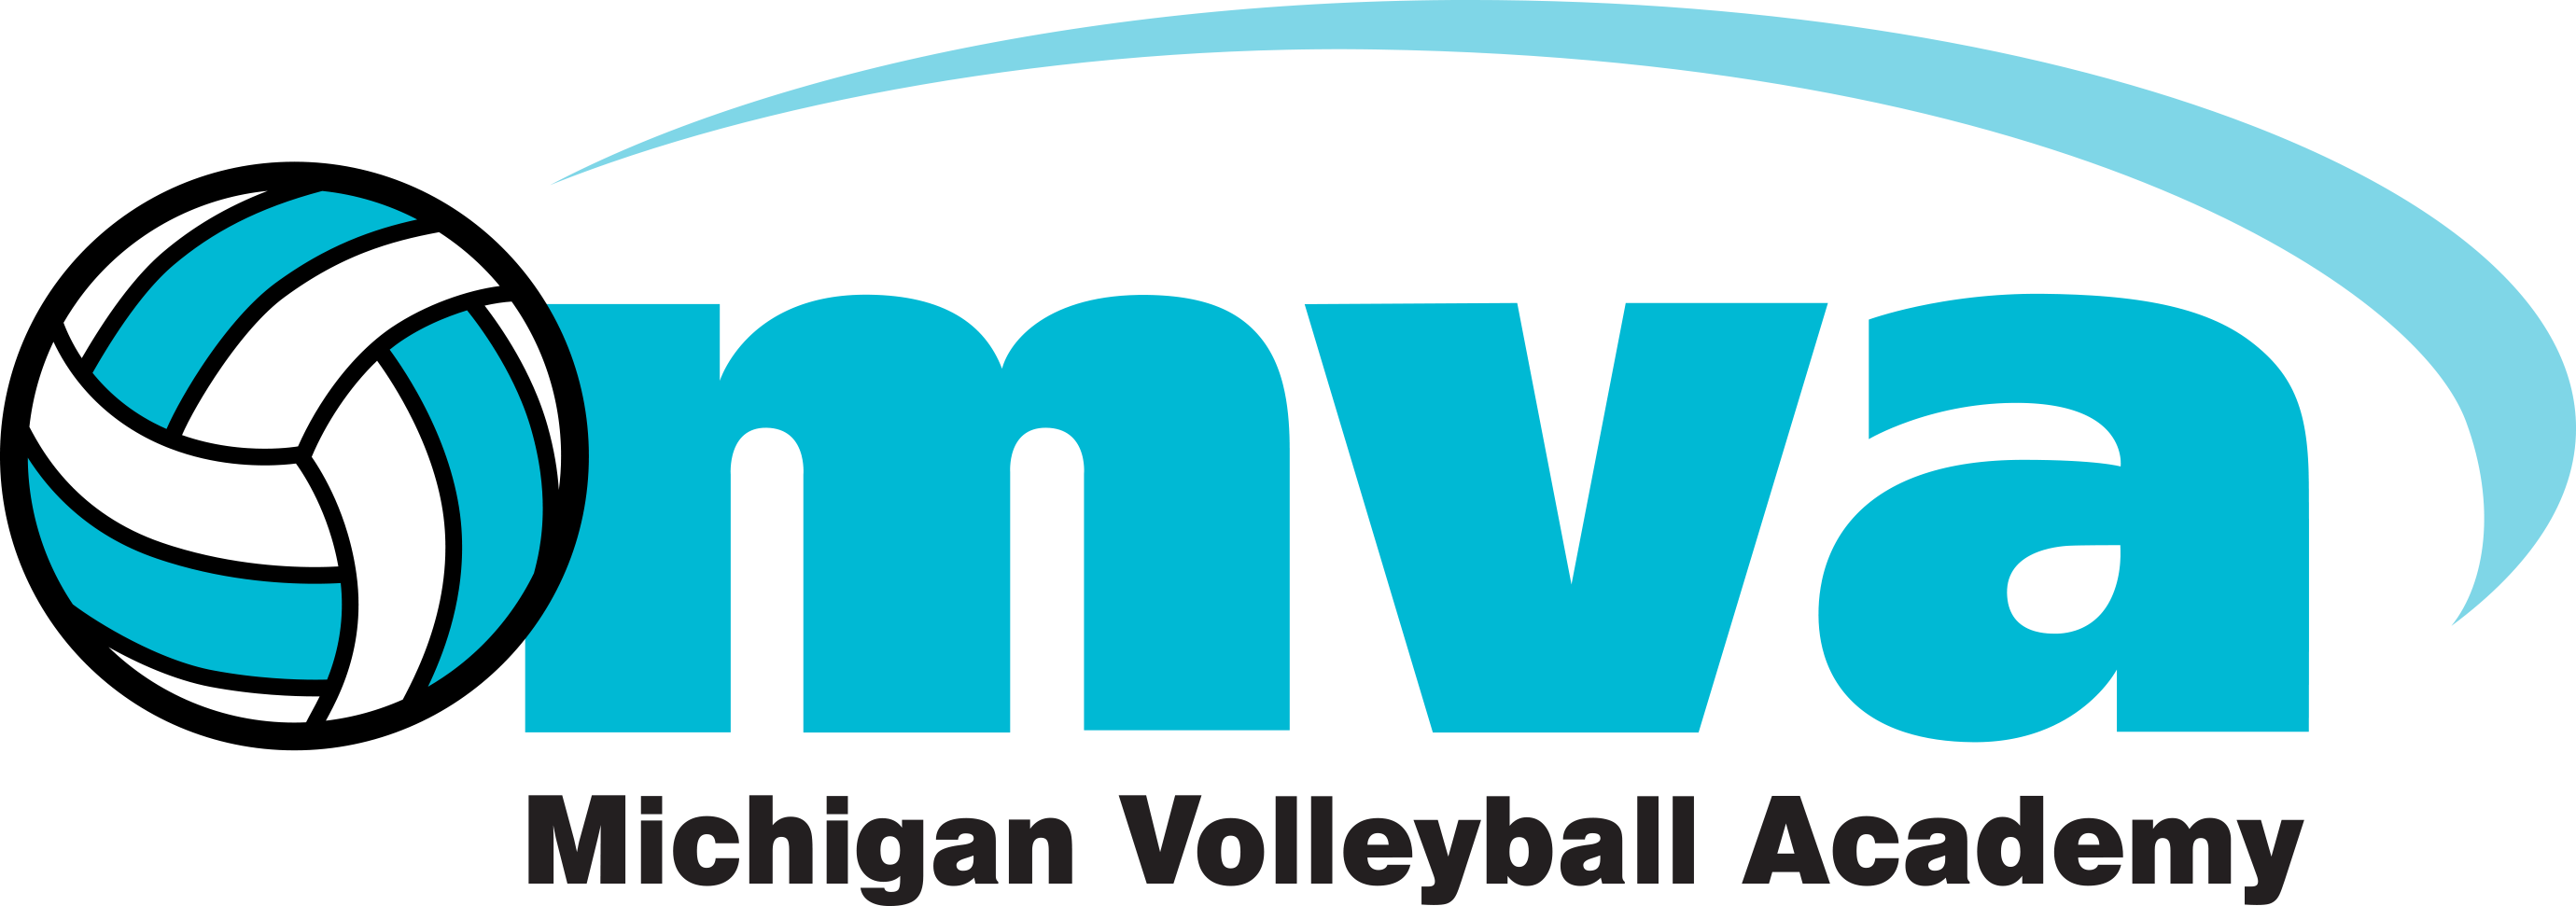 Using A Tier Training Program Where Collegiate Level - Michigan Volleyball Academy (2760x971)